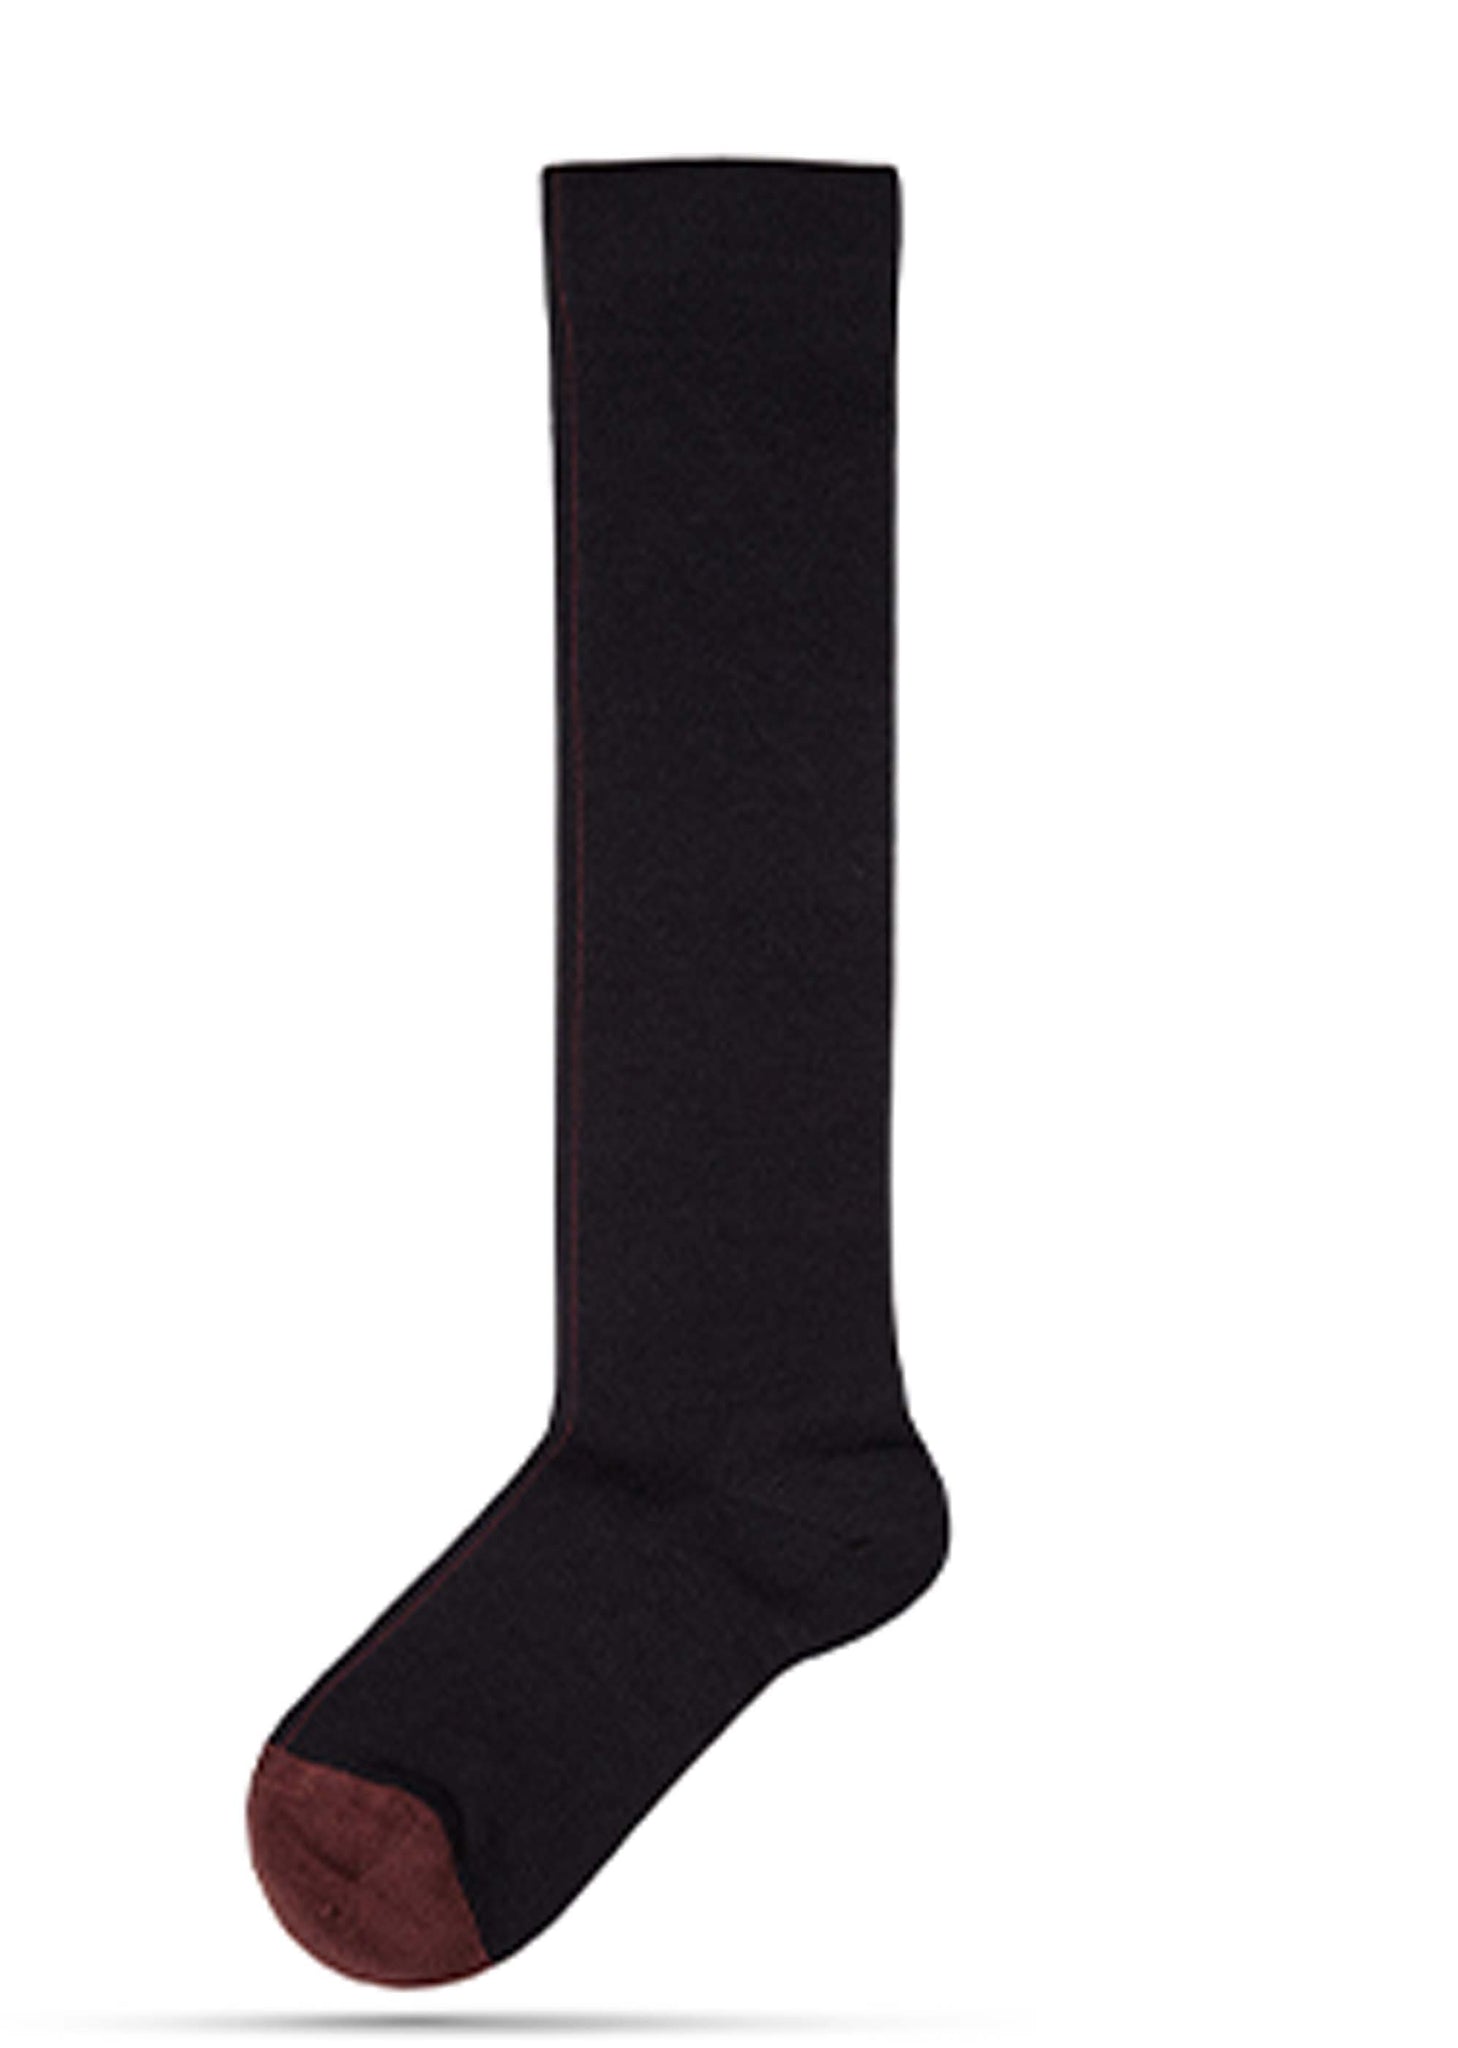 Black & Brown Calf-High Socks - 157Moments